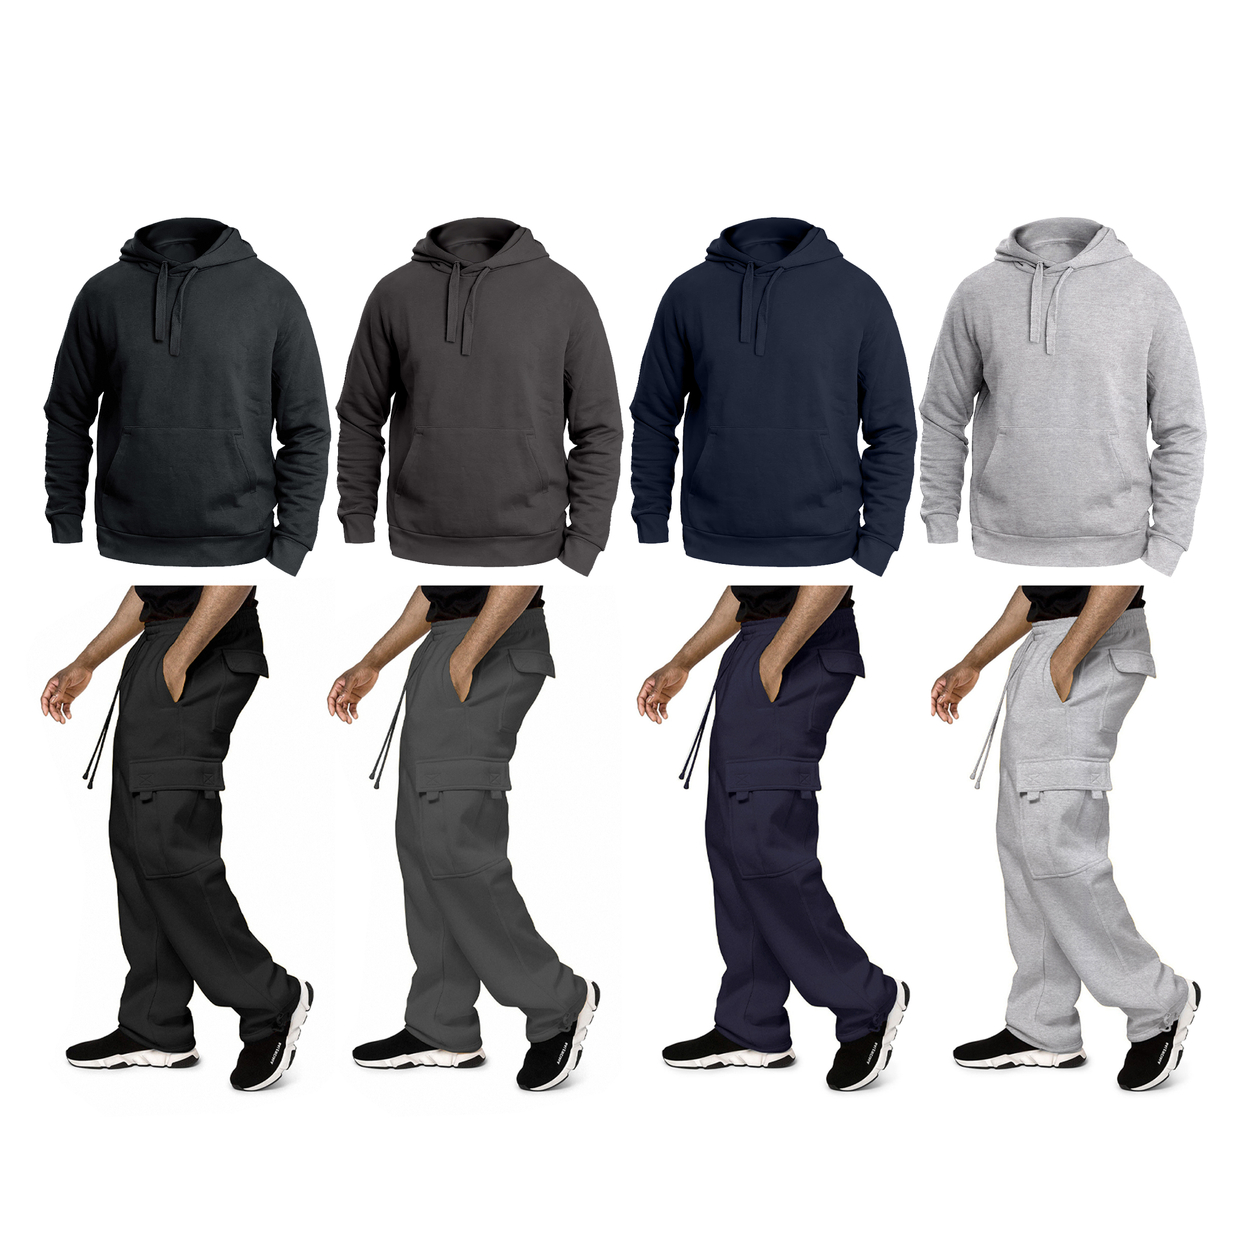 2-Pack: Men's Big & Tall Winter Warm Cozy Athletic Fleece Lined Multi-Pocket Cargo Sweatsuit - Black, Large